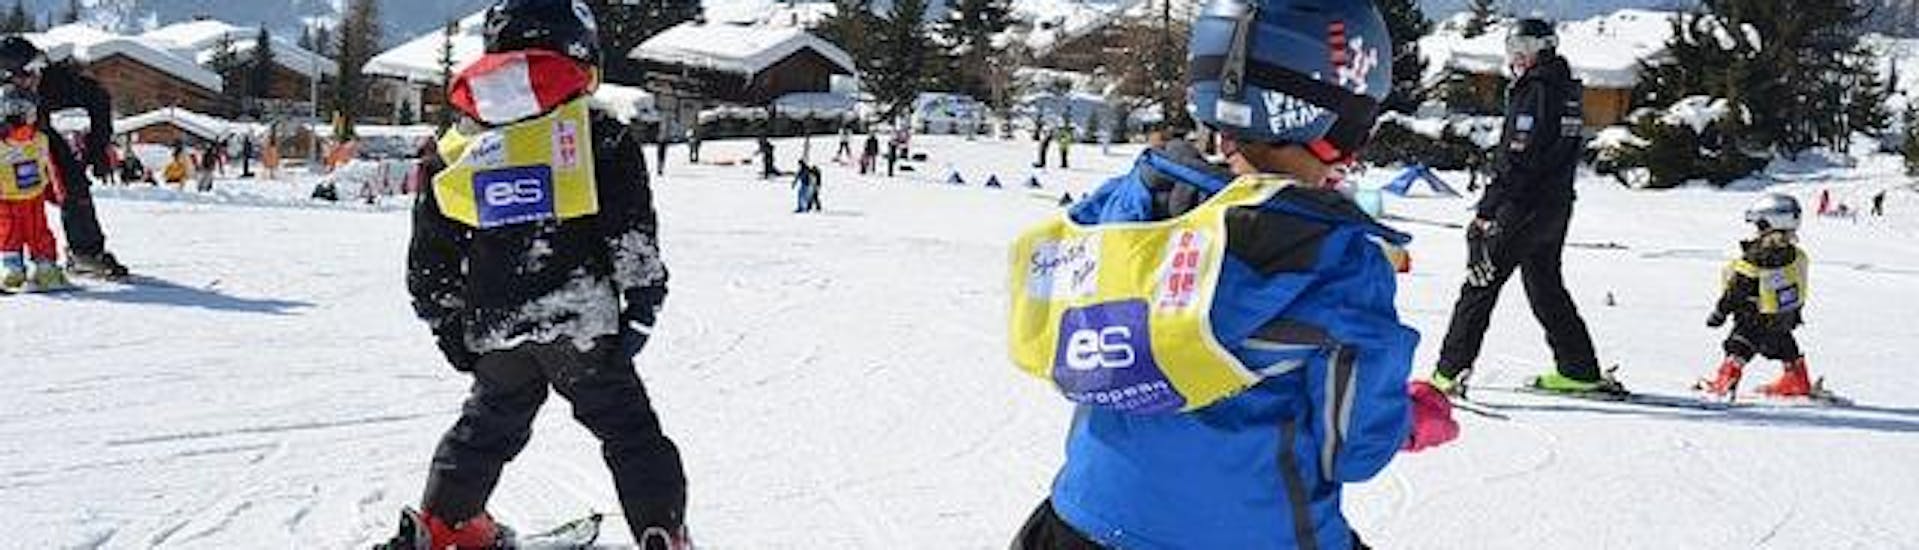 Kids Ski Lessons (6-12 y.) for Beginners with European Snowsport Verbier - Hero image